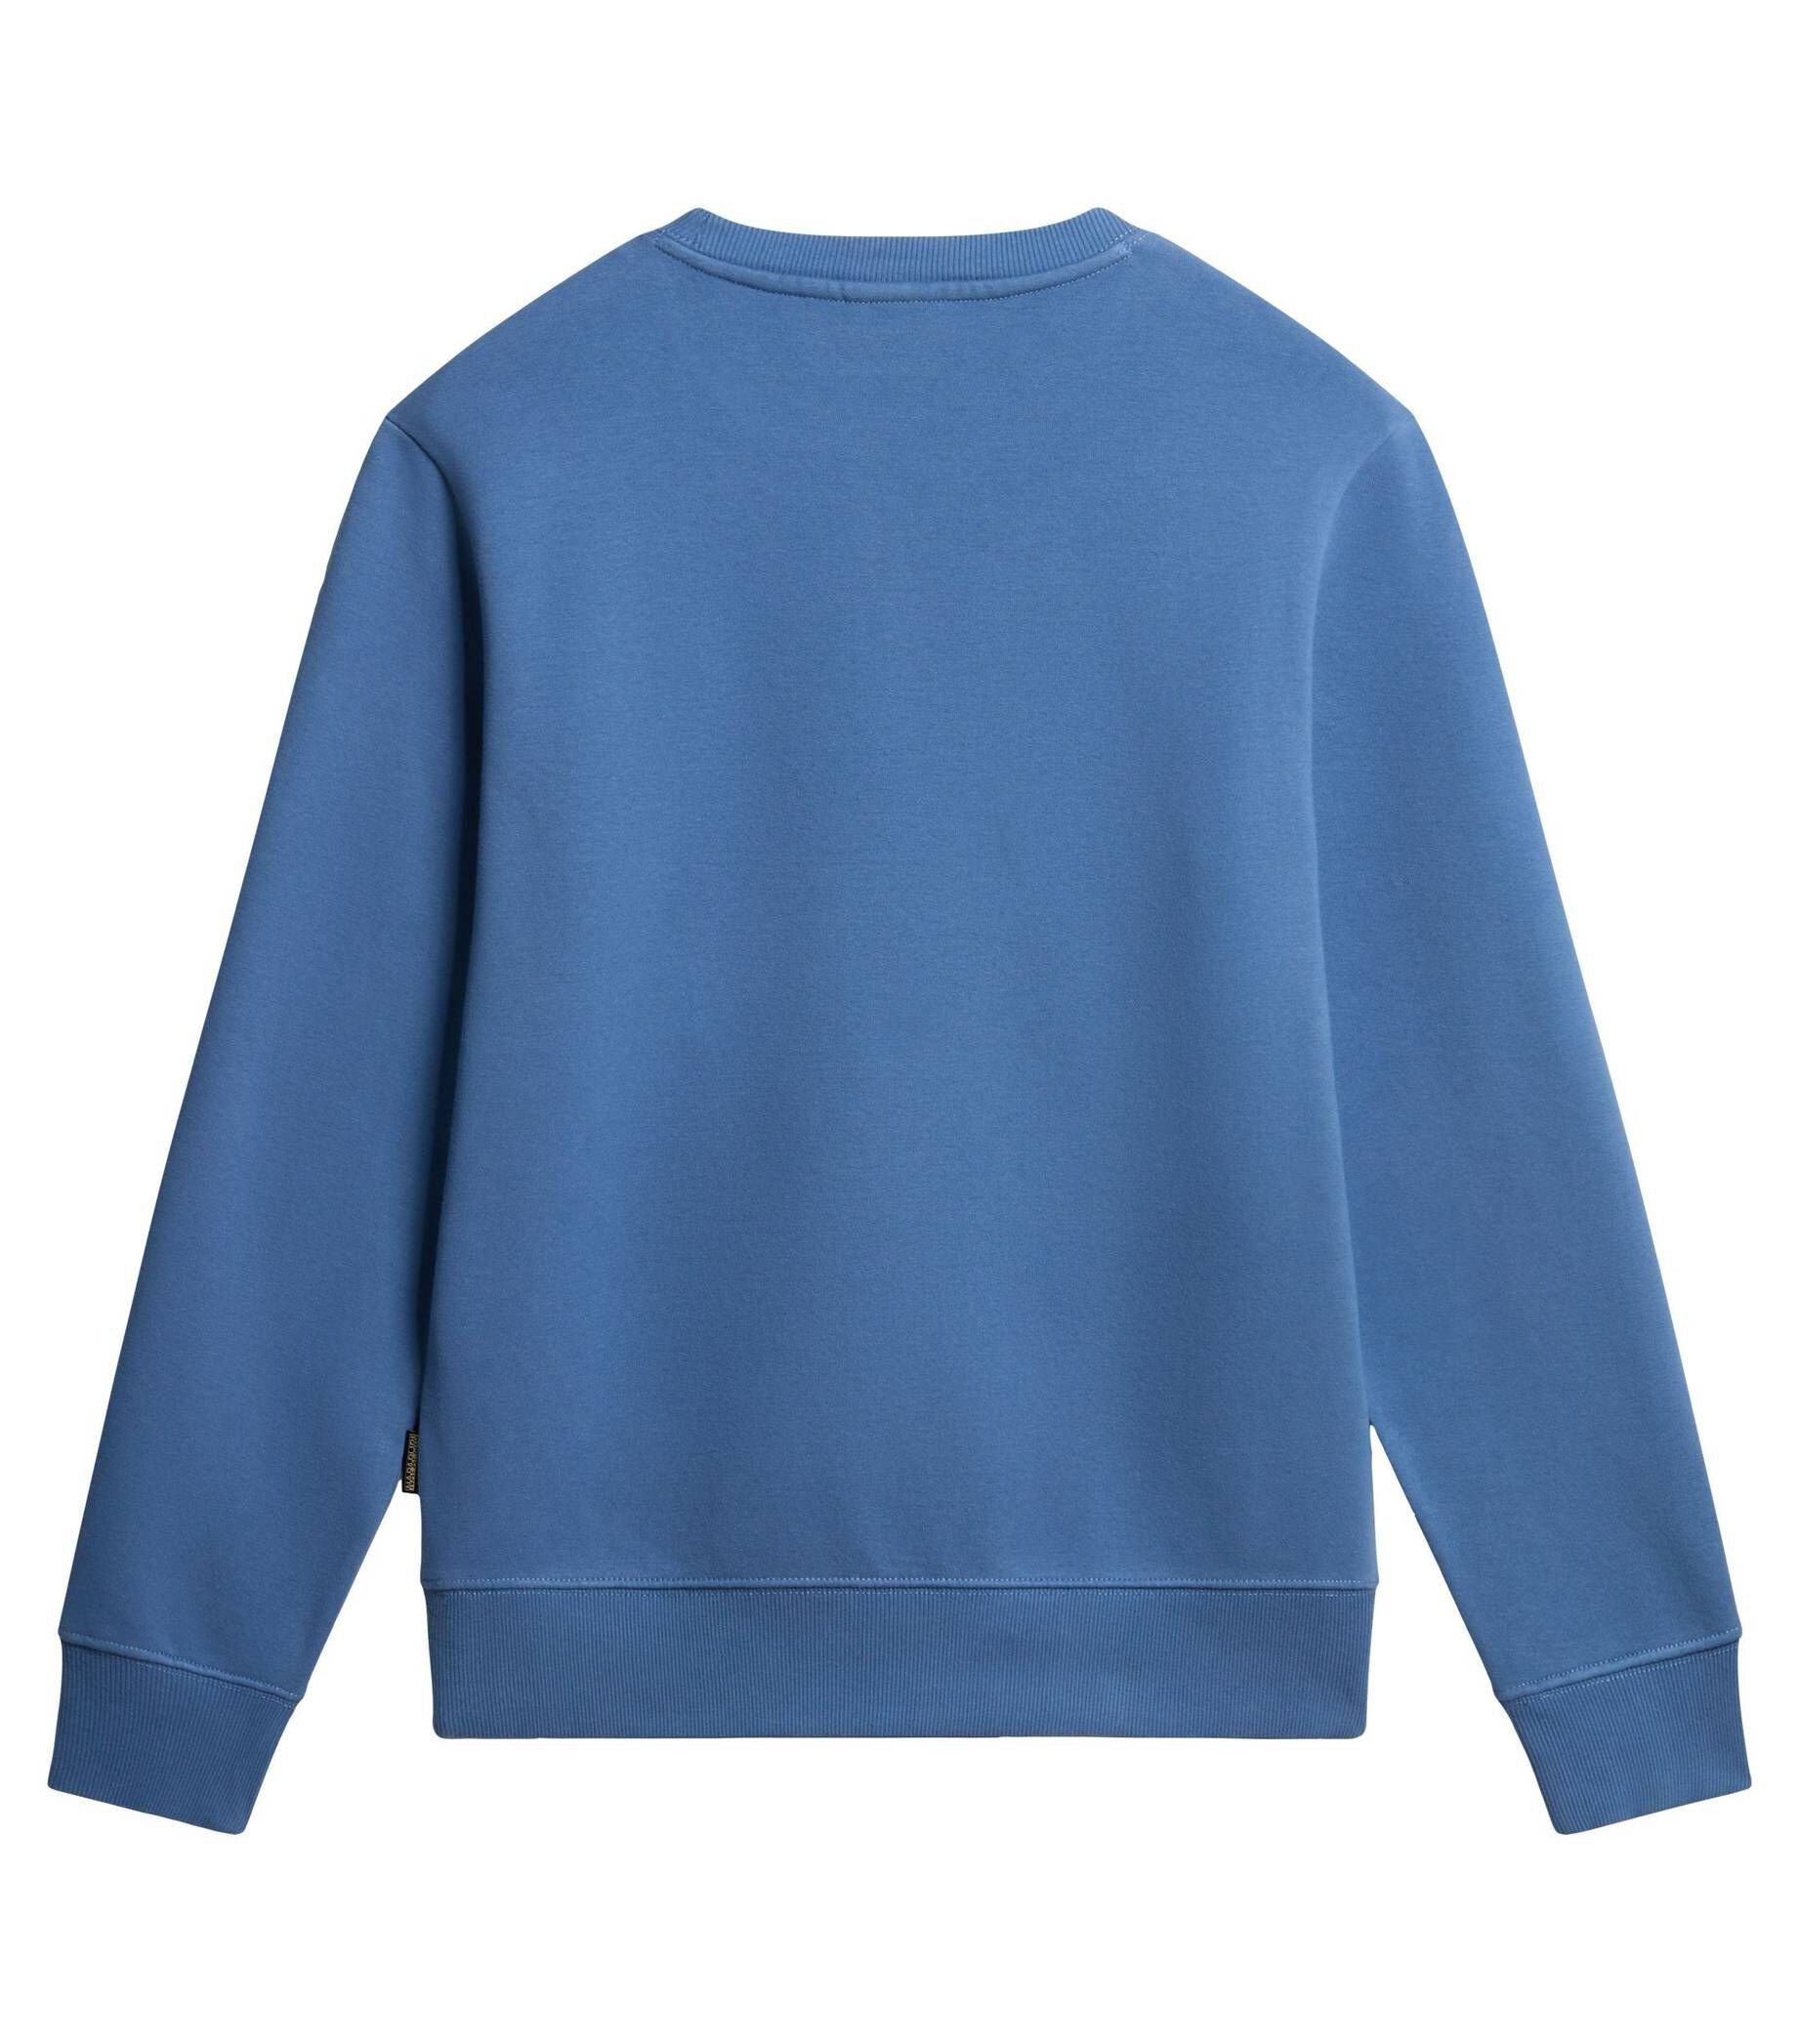 (1-tlg) B-AYAS T-Shirt Napapijri (51) Sweatshirt blau Herren